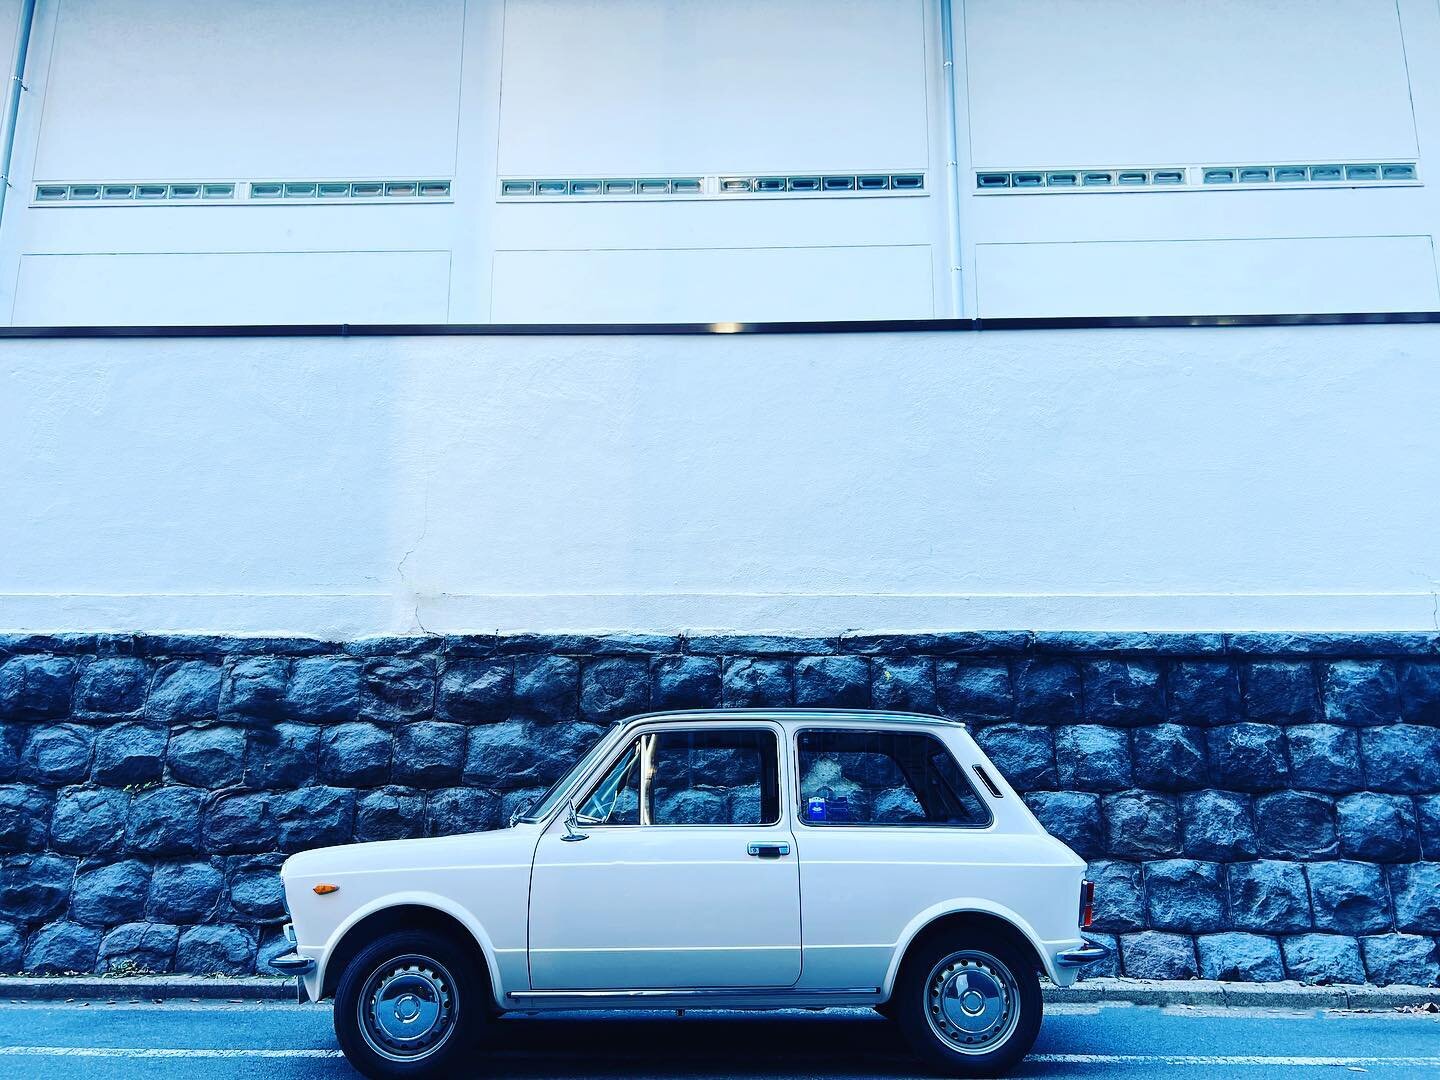 Auguri!!!🎄

2022年も終わりですねえ&hellip;

#autobianchi #a112 #fiat #italianmini #smallcar #italiandesign #vintagecar #旧車 #イタリア車 #productdesign #cardesign #StyleIcon